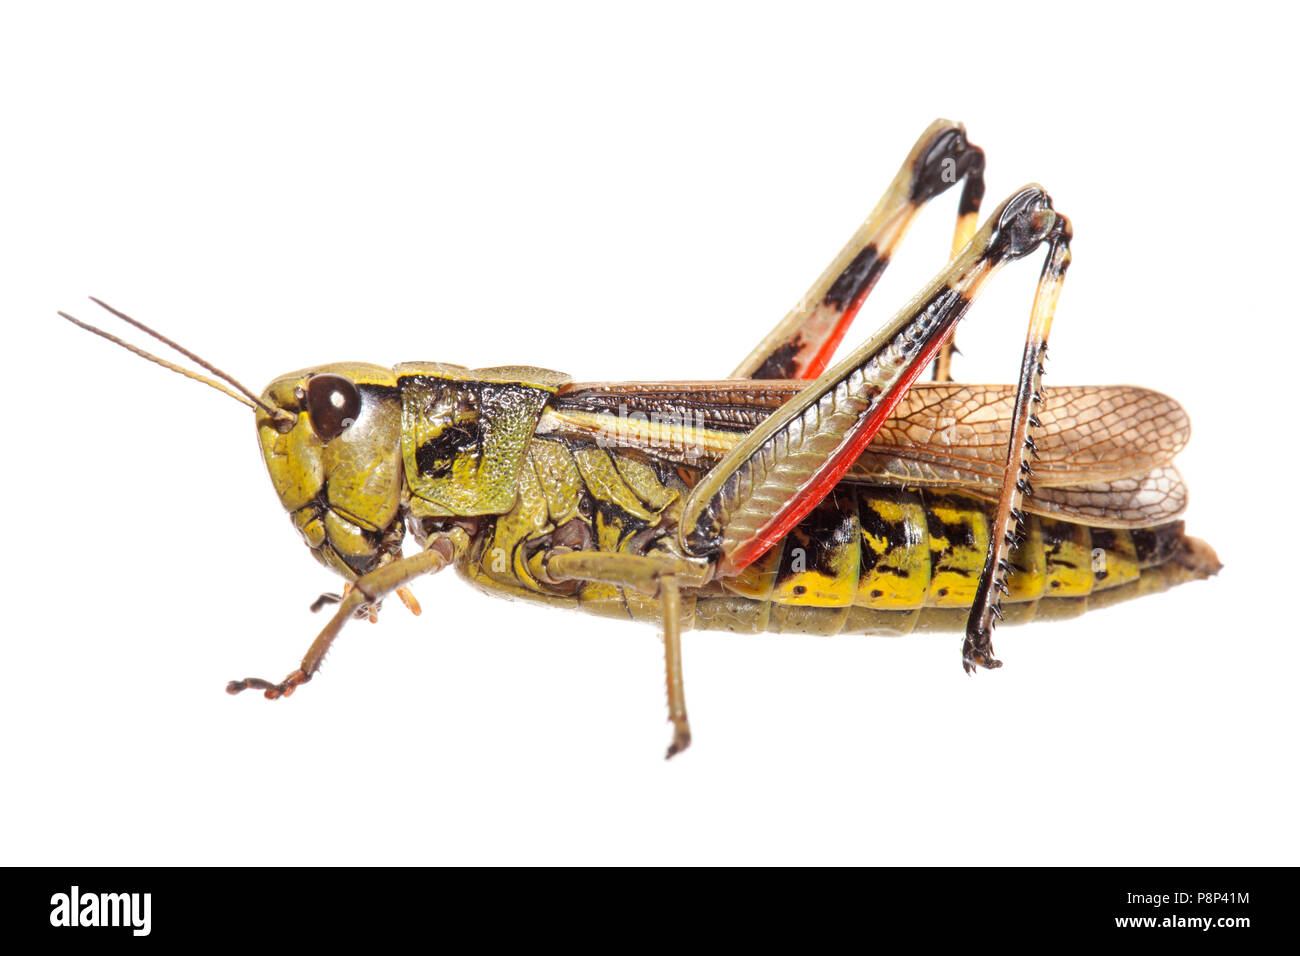 large marsh grasshopper isolated against a white background Stock Photo